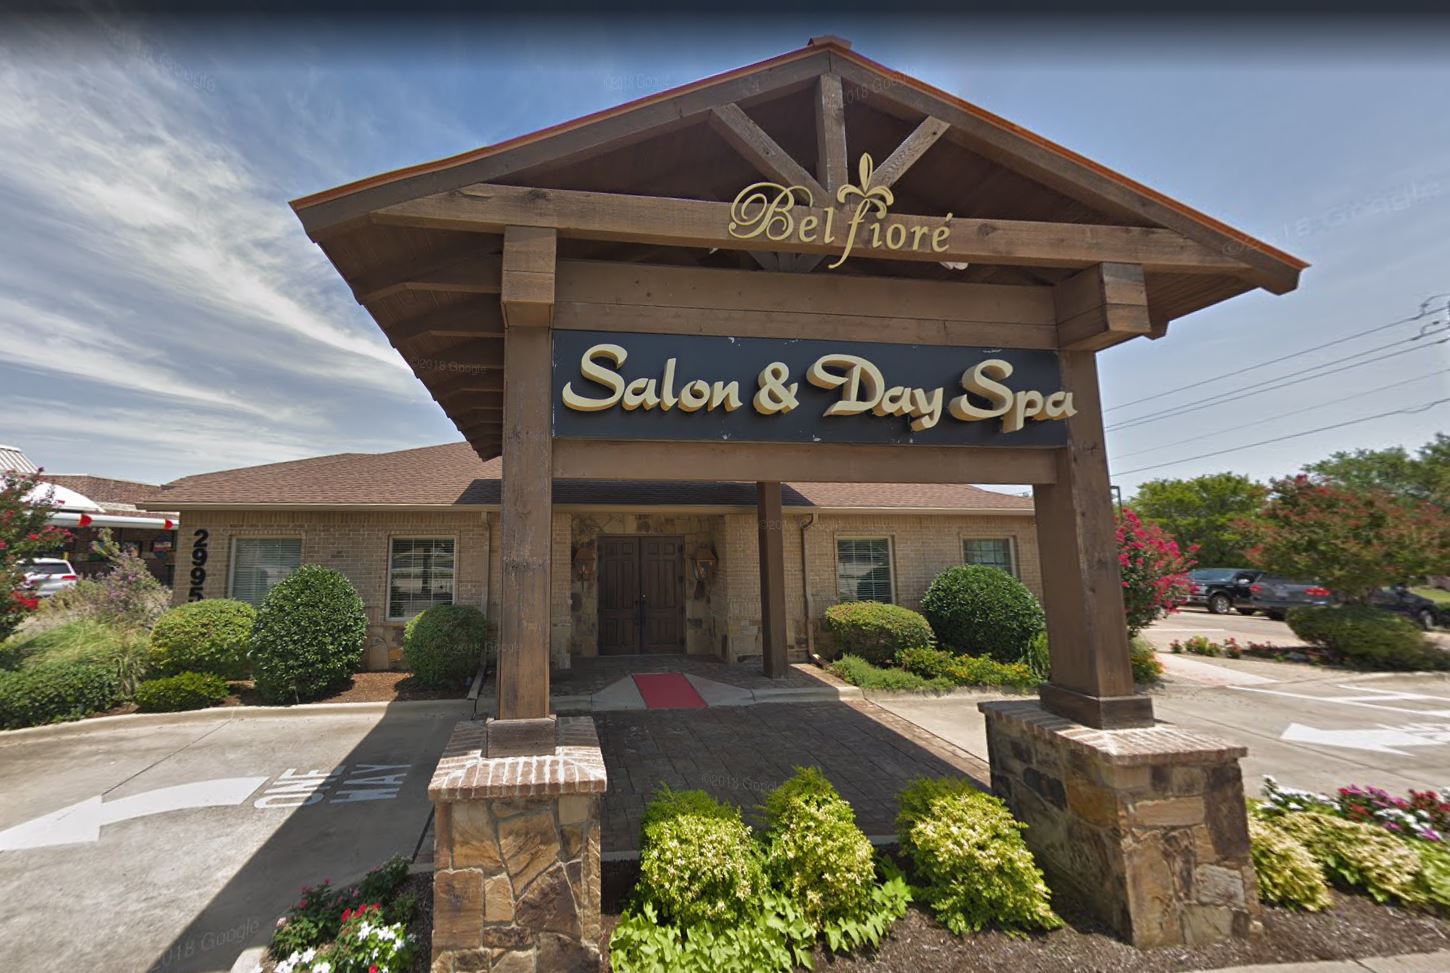 Belfiore Salon & Day Spa